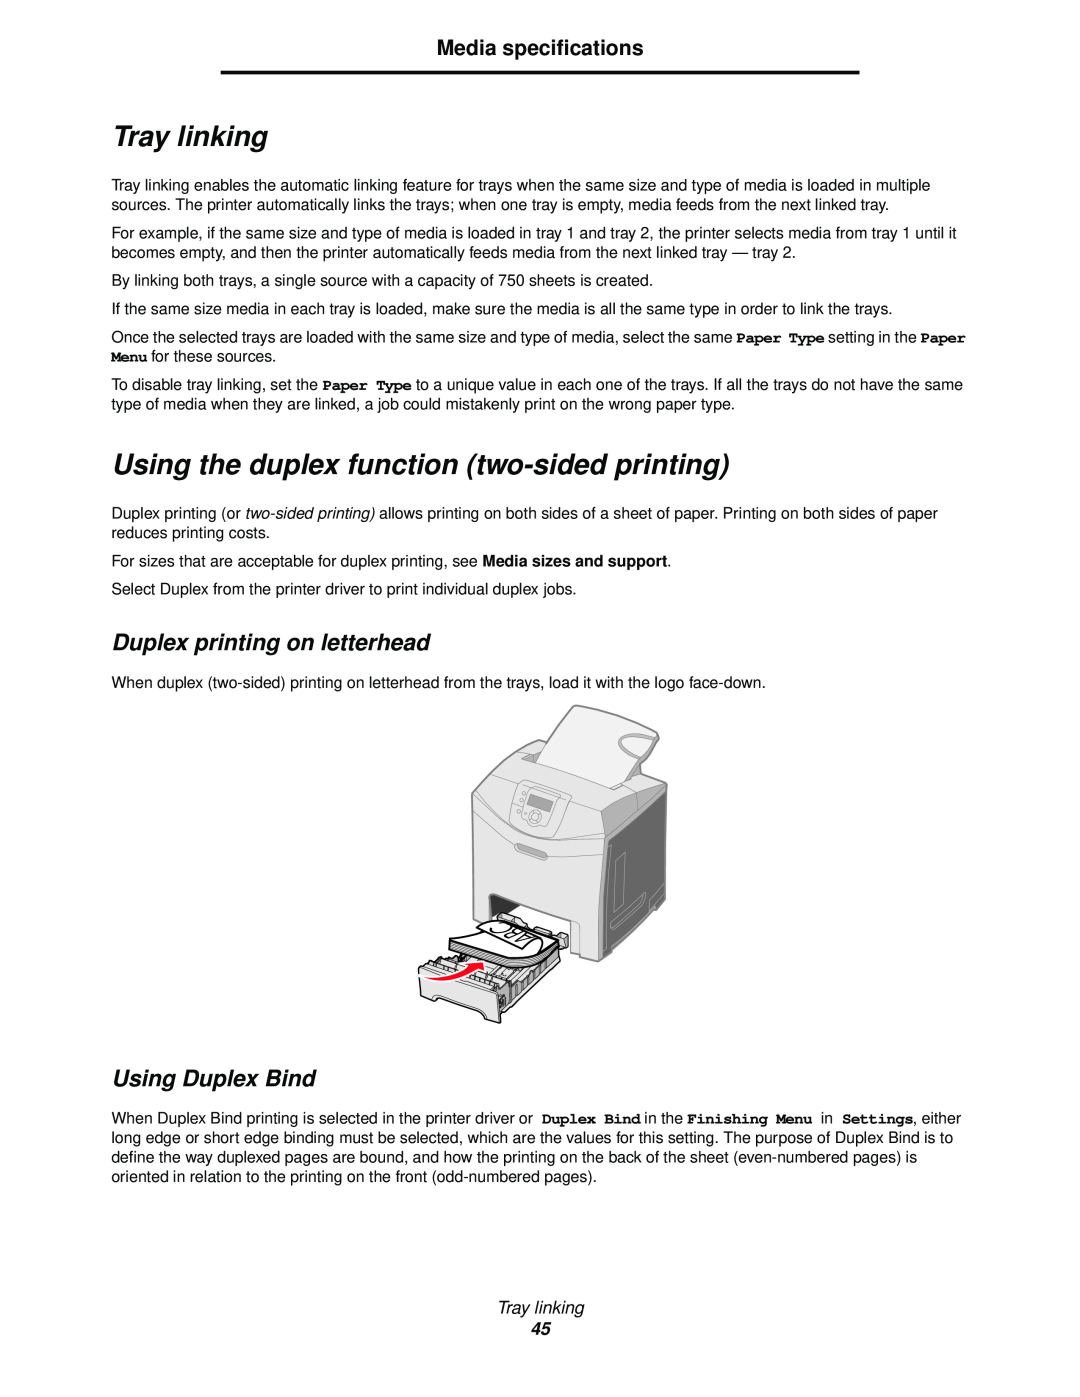 Lexmark C524 Tray linking, Using the duplex function two-sided printing, Duplex printing on letterhead, Using Duplex Bind 